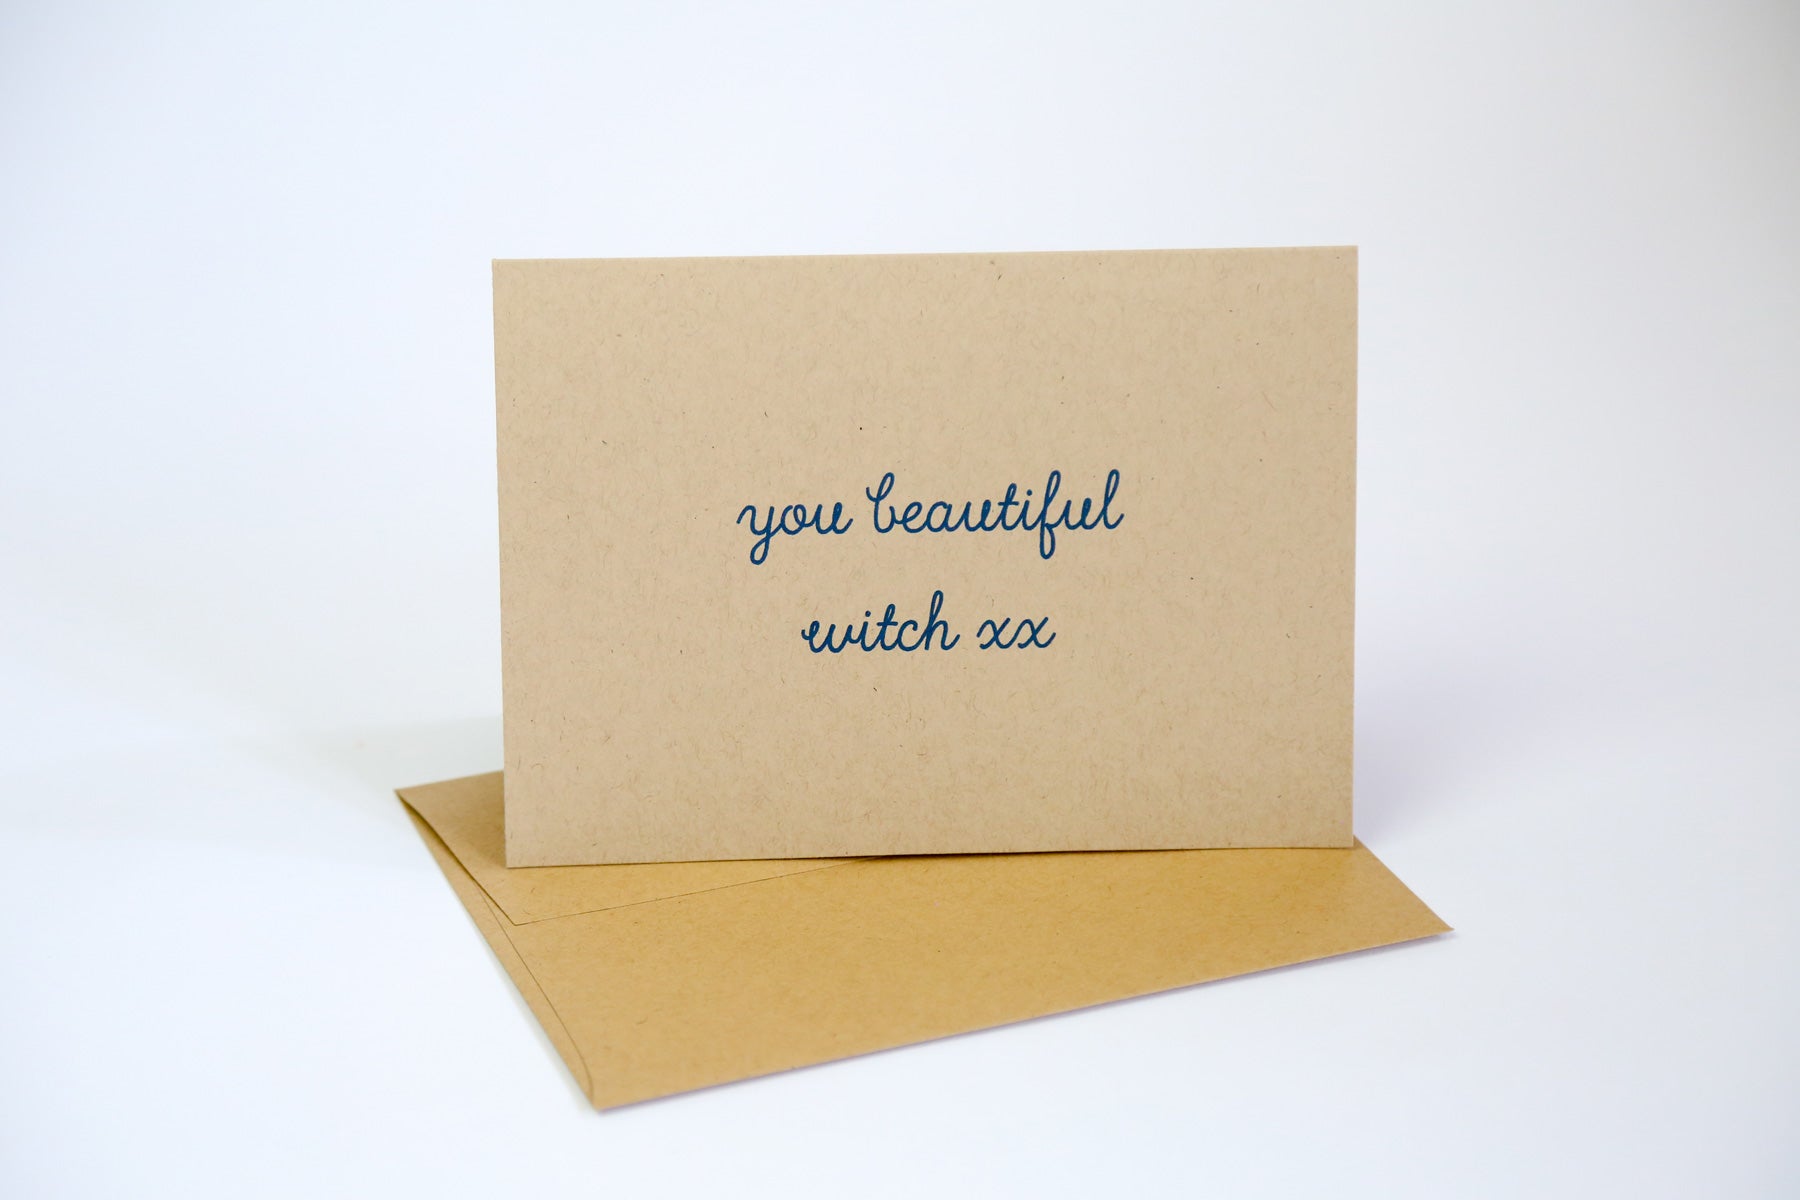 You beautiful witch xx - Greeting Card